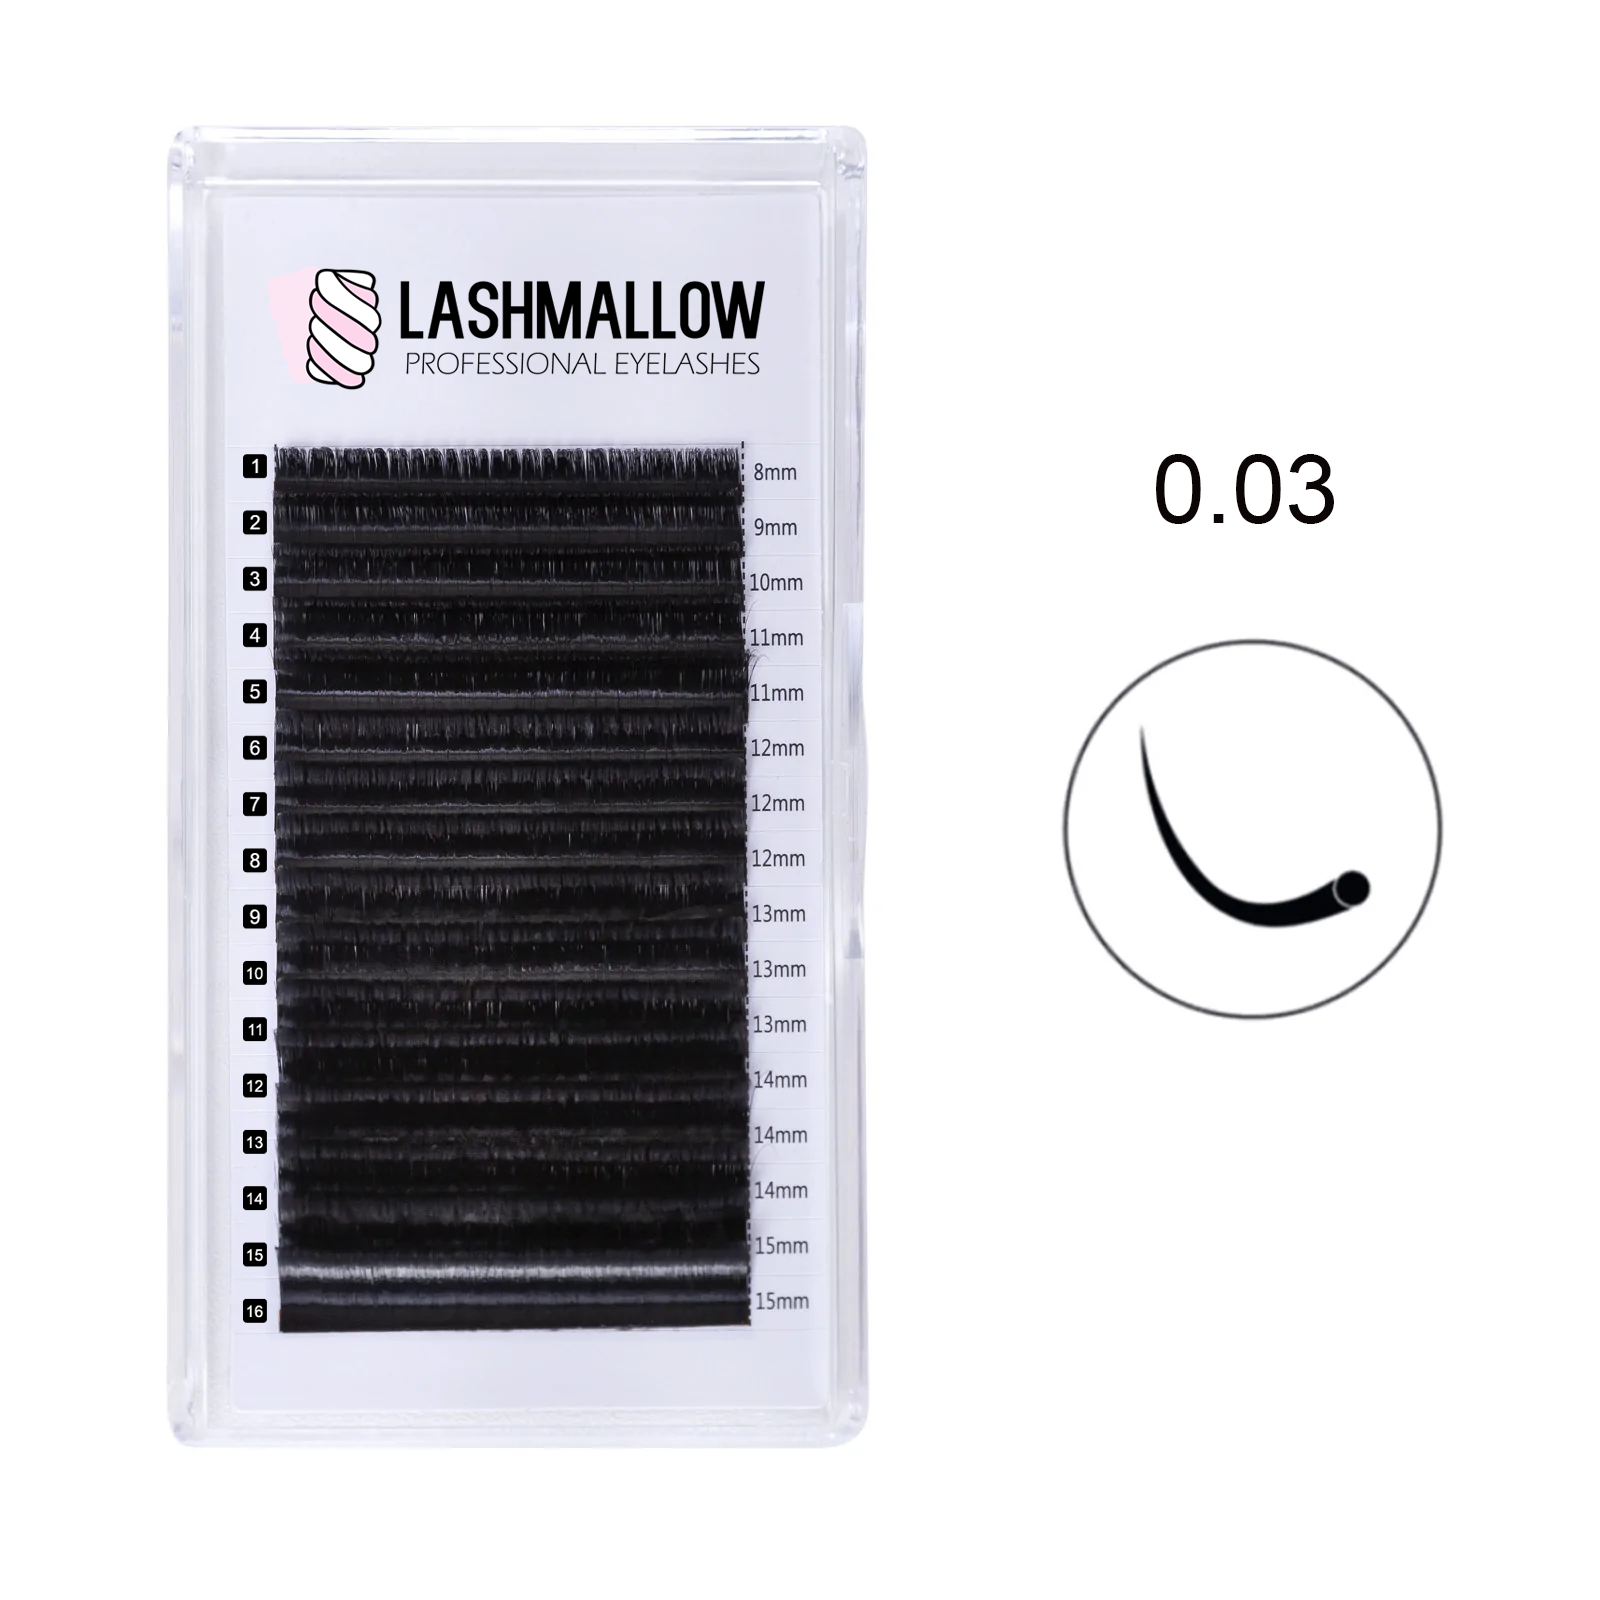 0.03 Premium Volume Lashes 8-16mm Eyelash Extension Trays